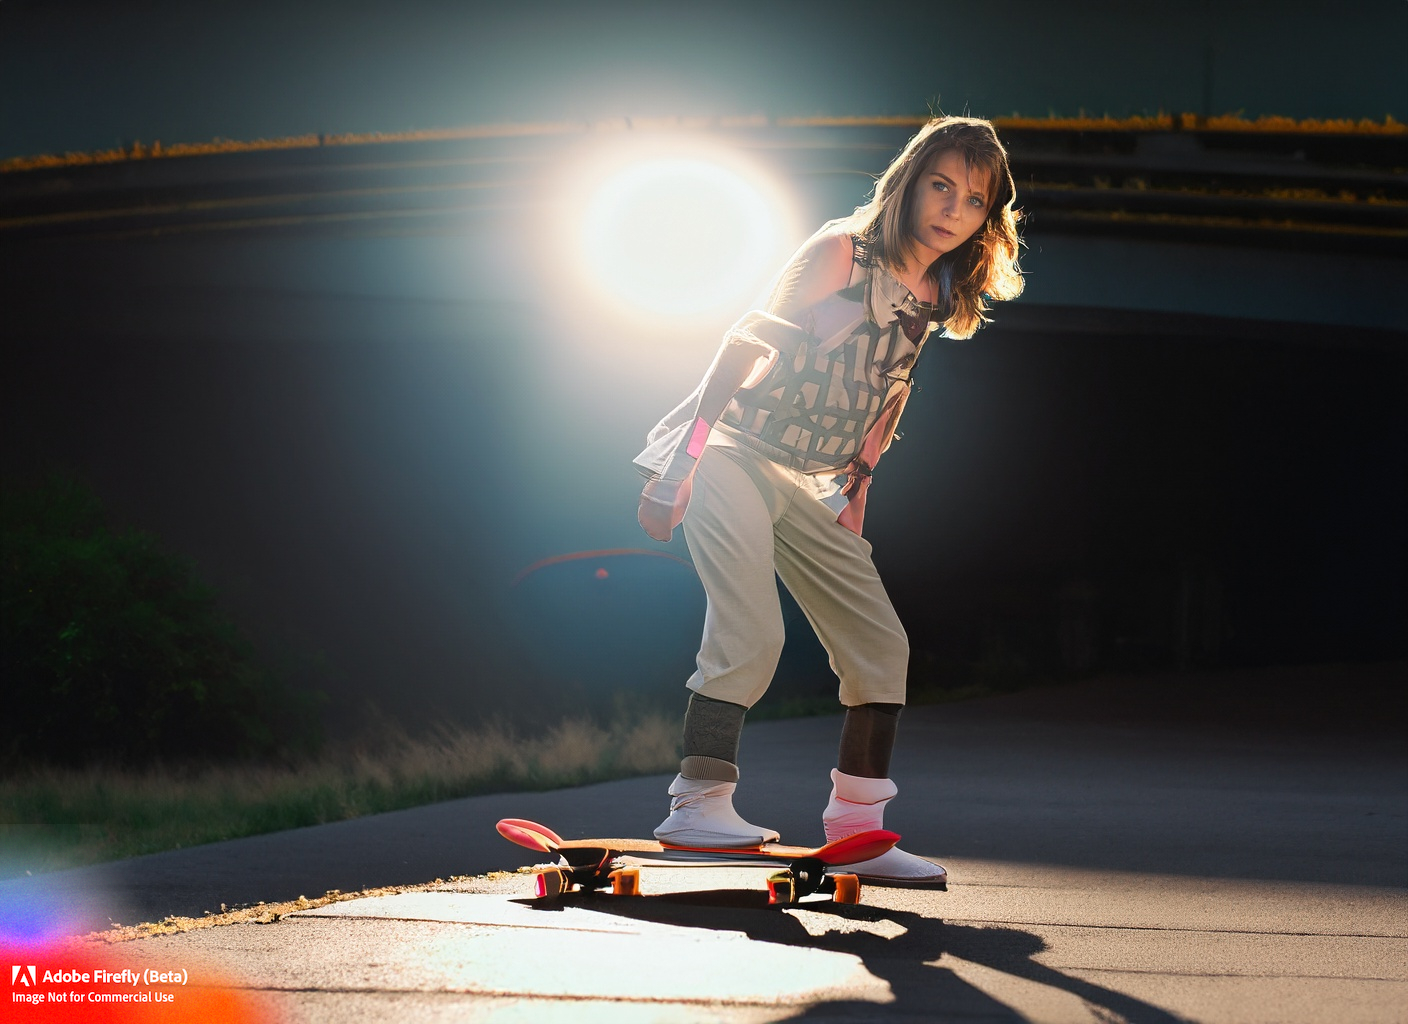 Firefly_Girl+on a skateboard with backlight_photo_96636